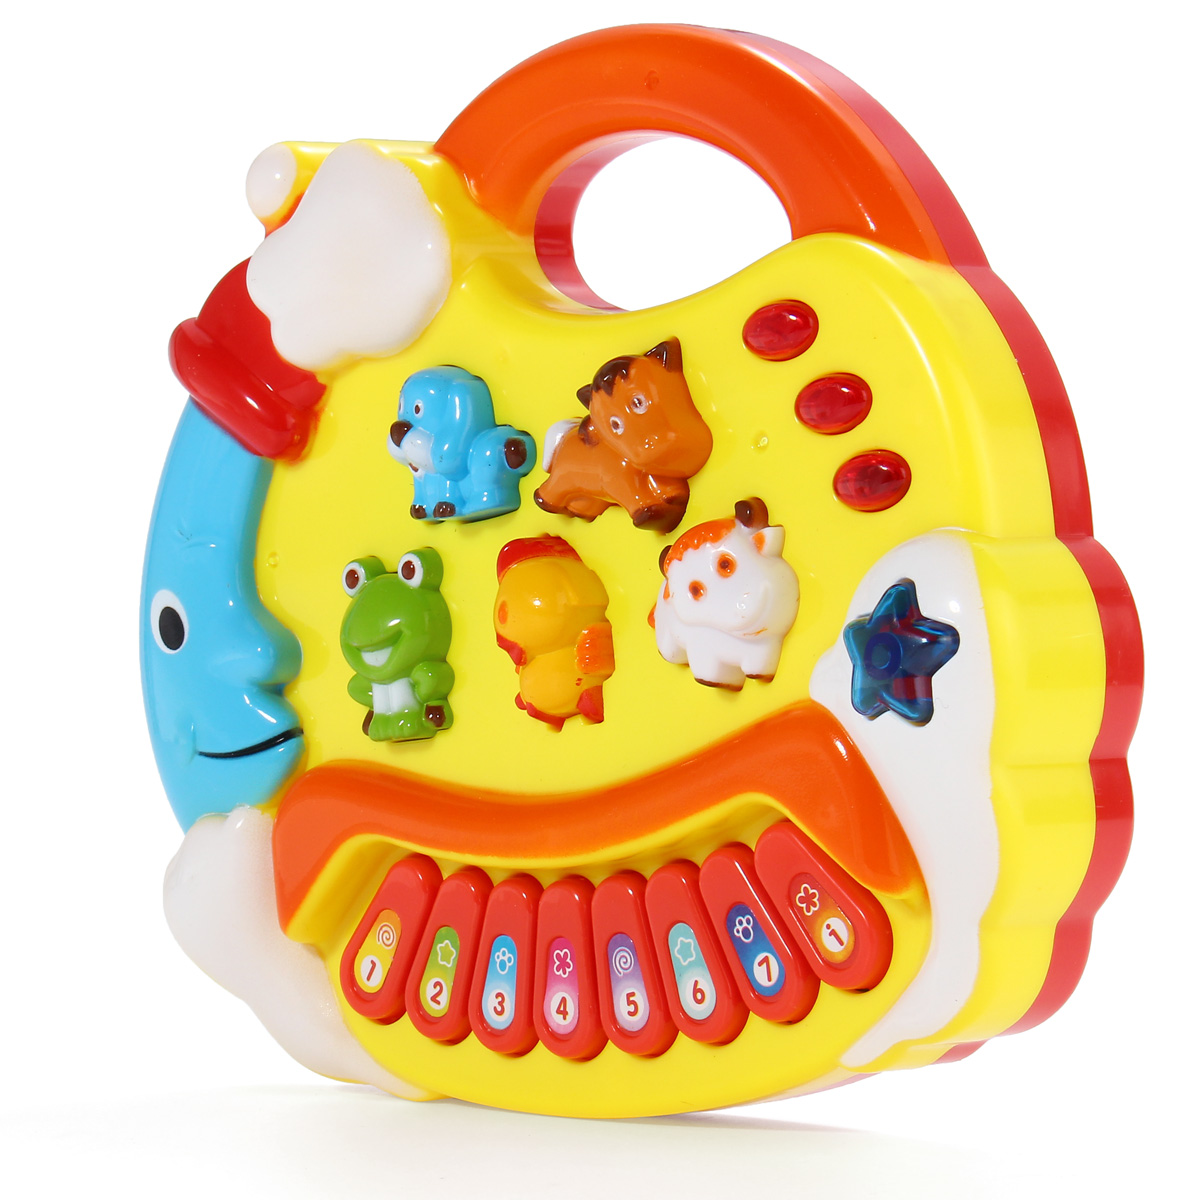 

Baby Kids Animal Farm Musical Toys Educational Piano Mini Sounding Toy Developmental for Children